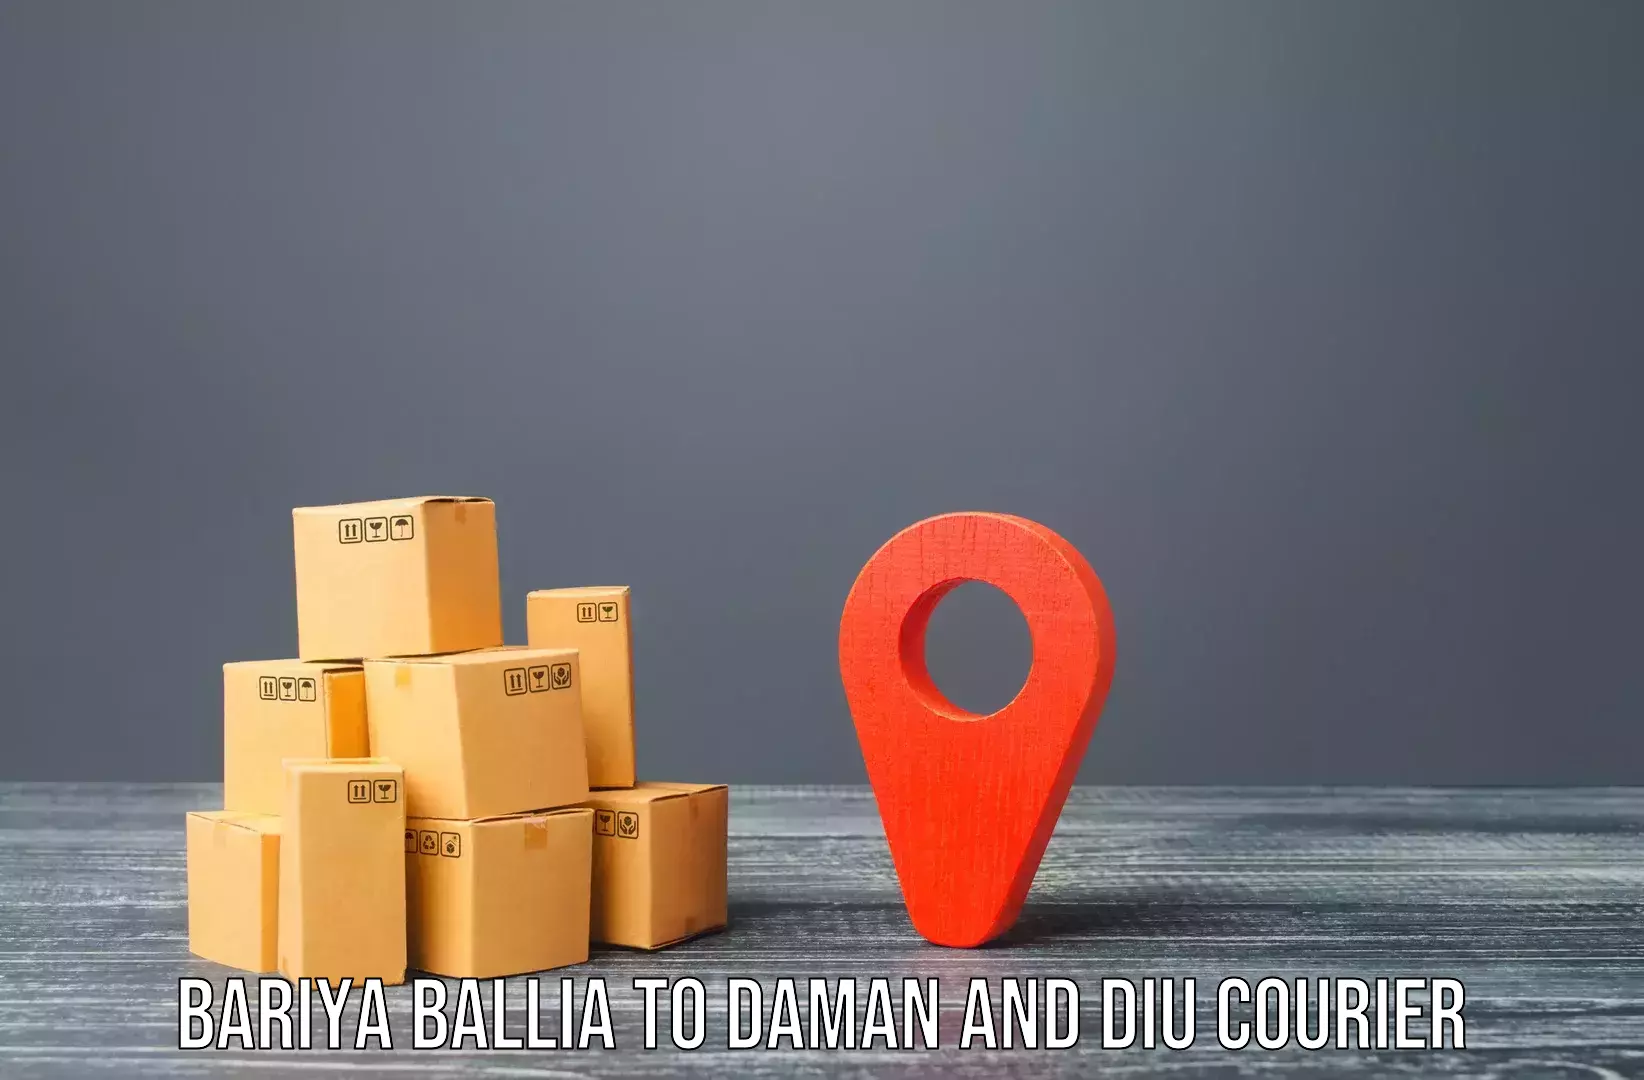 Professional movers and packers Bariya Ballia to Diu